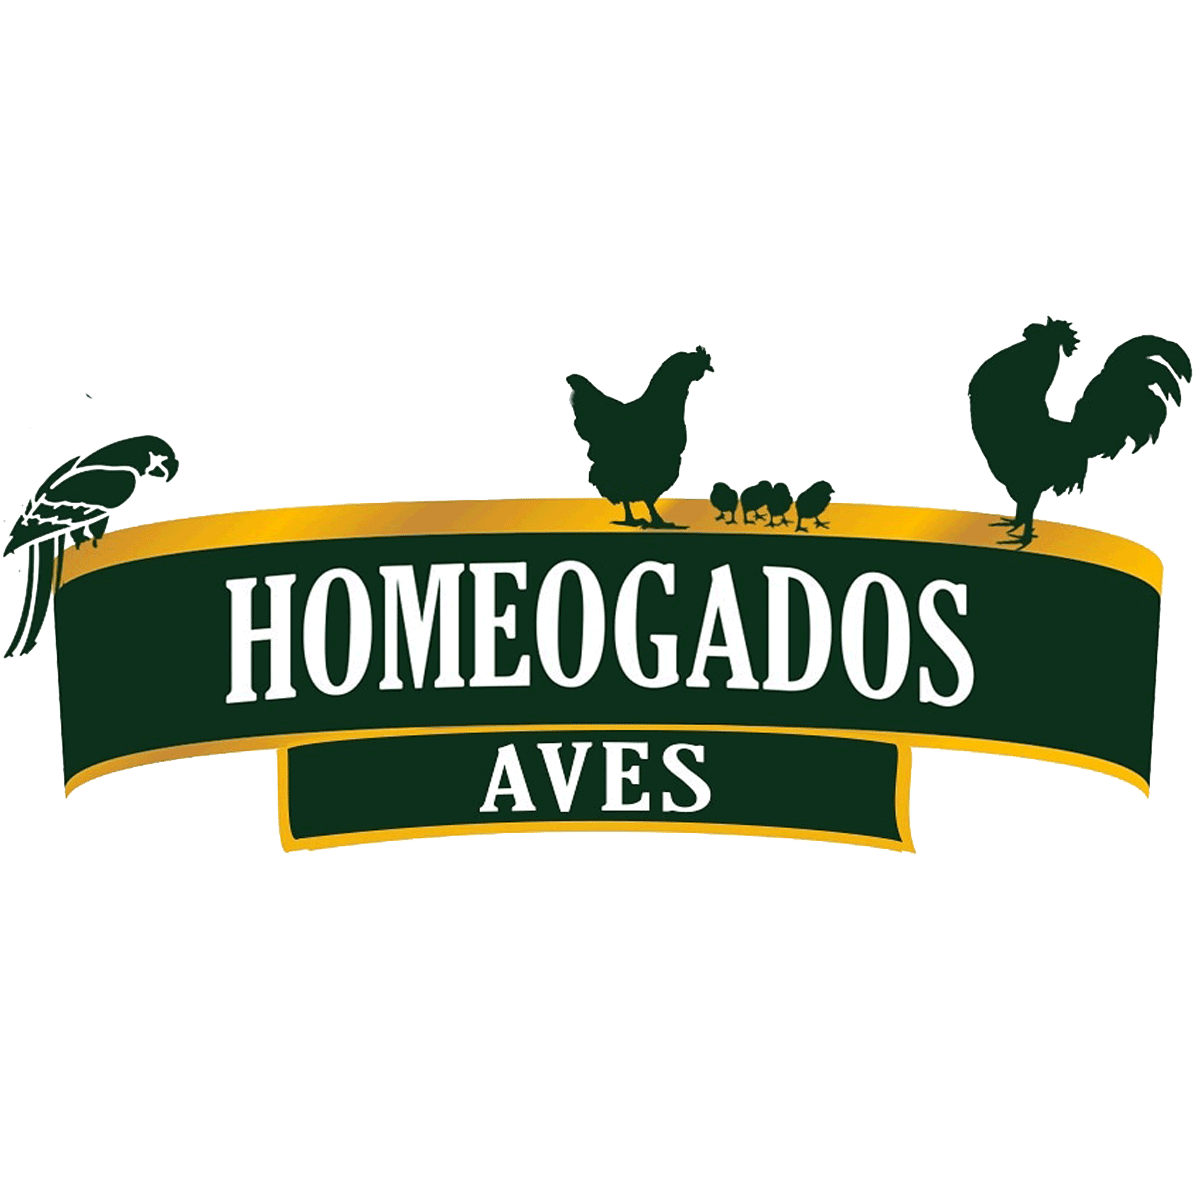 HOMEOGADOS AVES